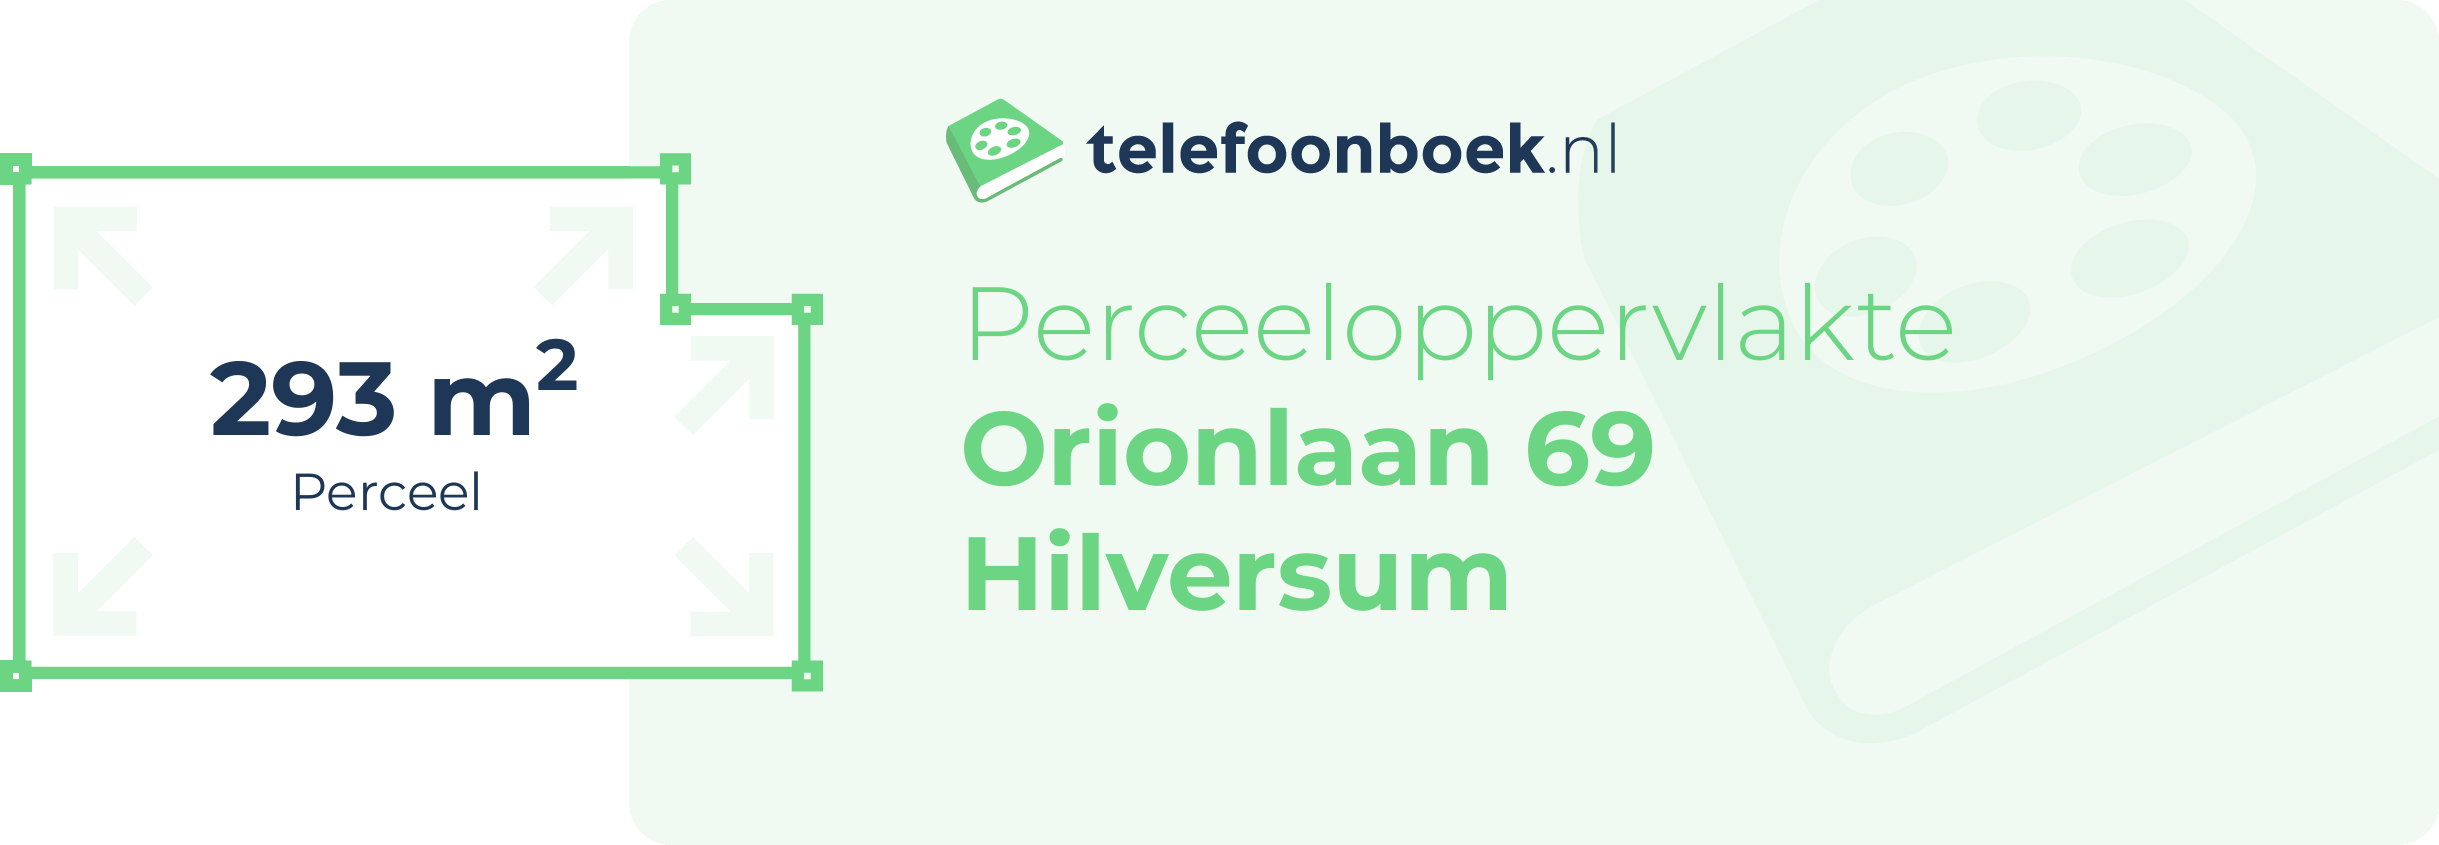 Perceeloppervlakte Orionlaan 69 Hilversum